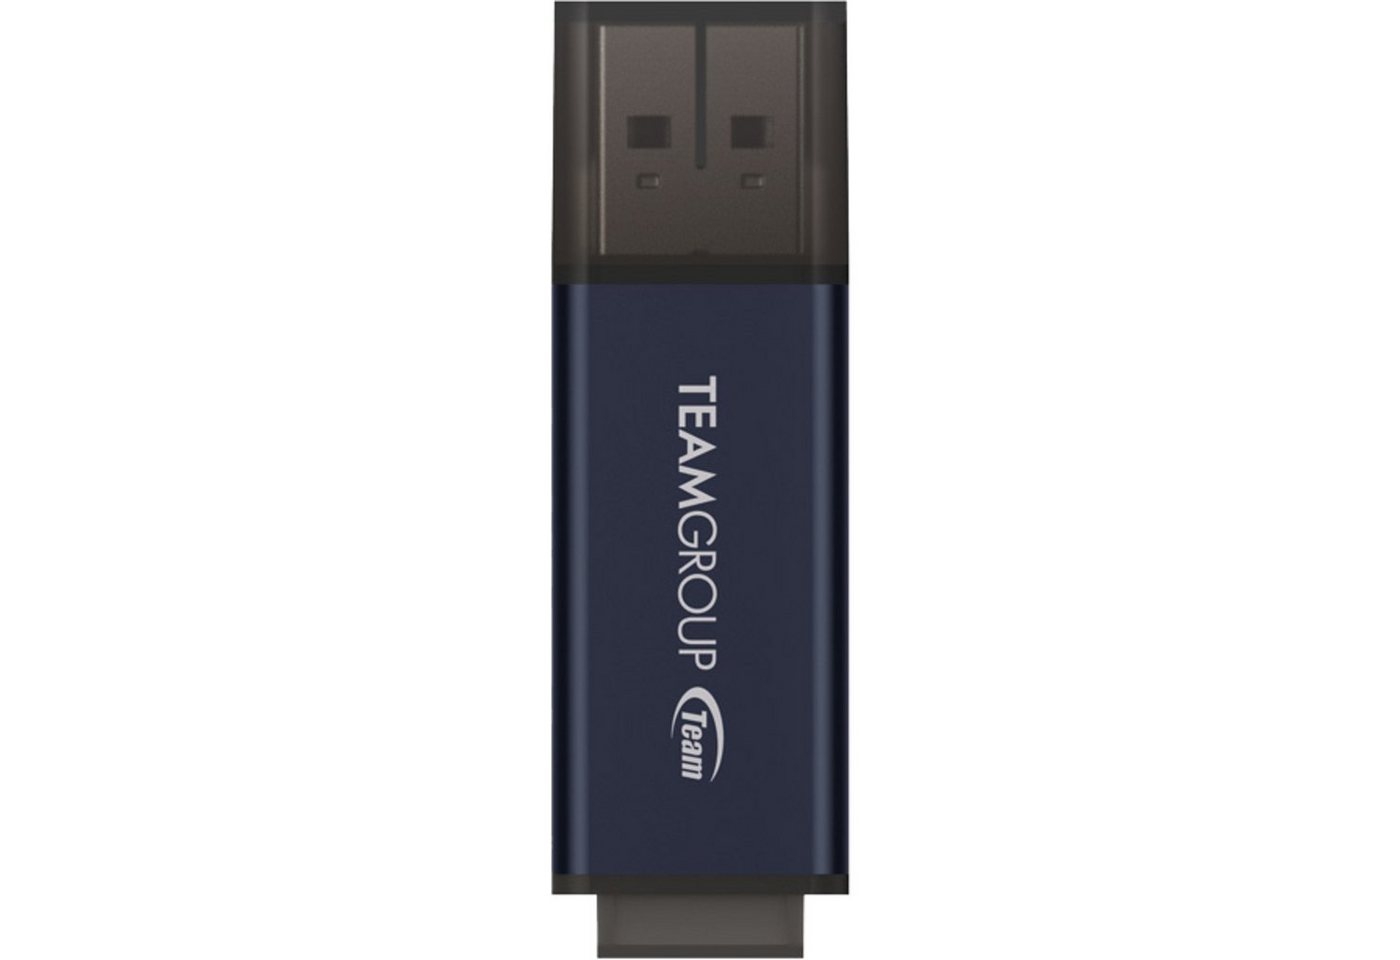 Teamgroup C211 256 GB USB-Stick von Teamgroup